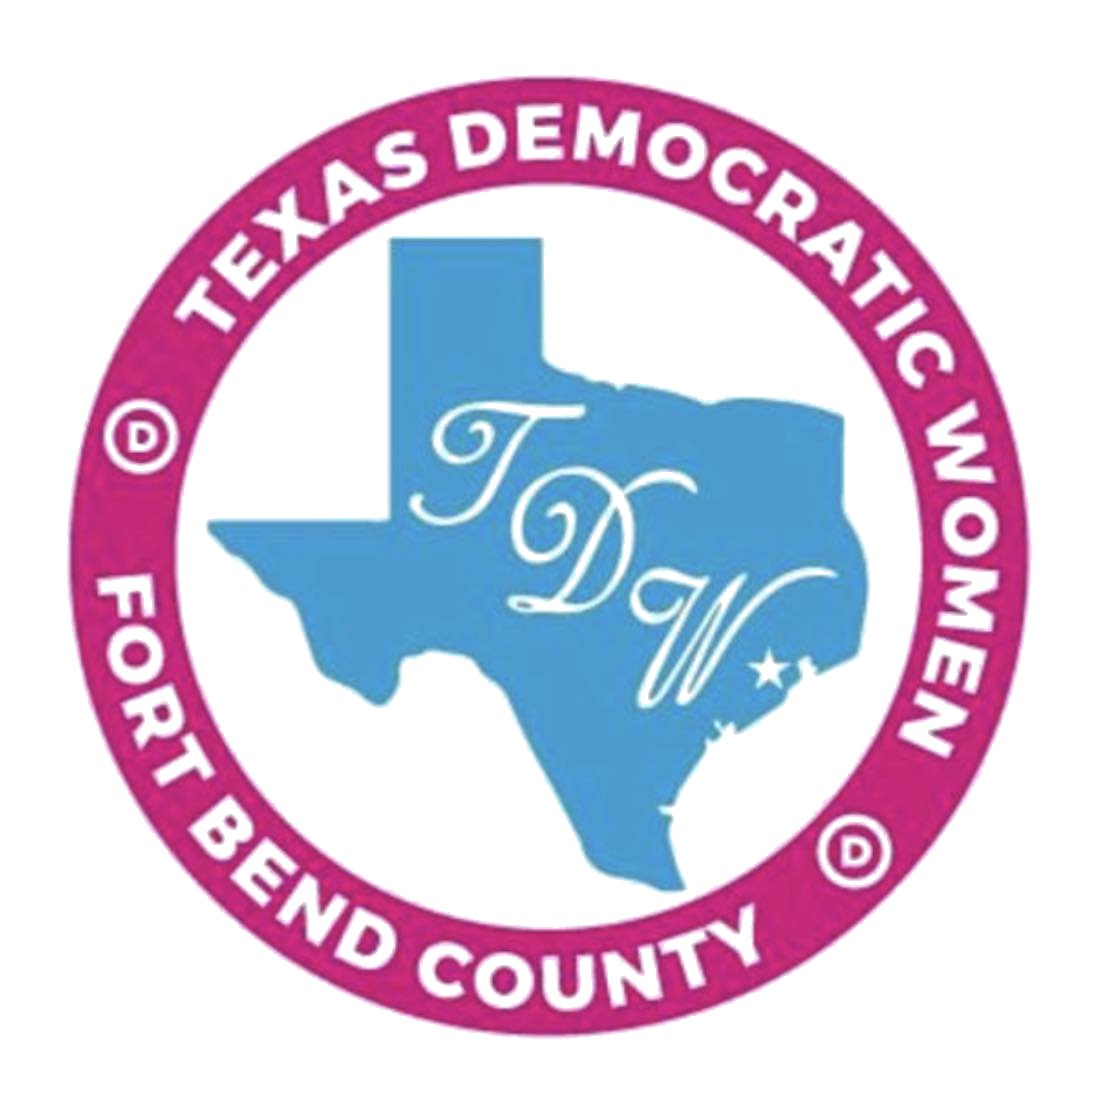 Texas Democratic Women